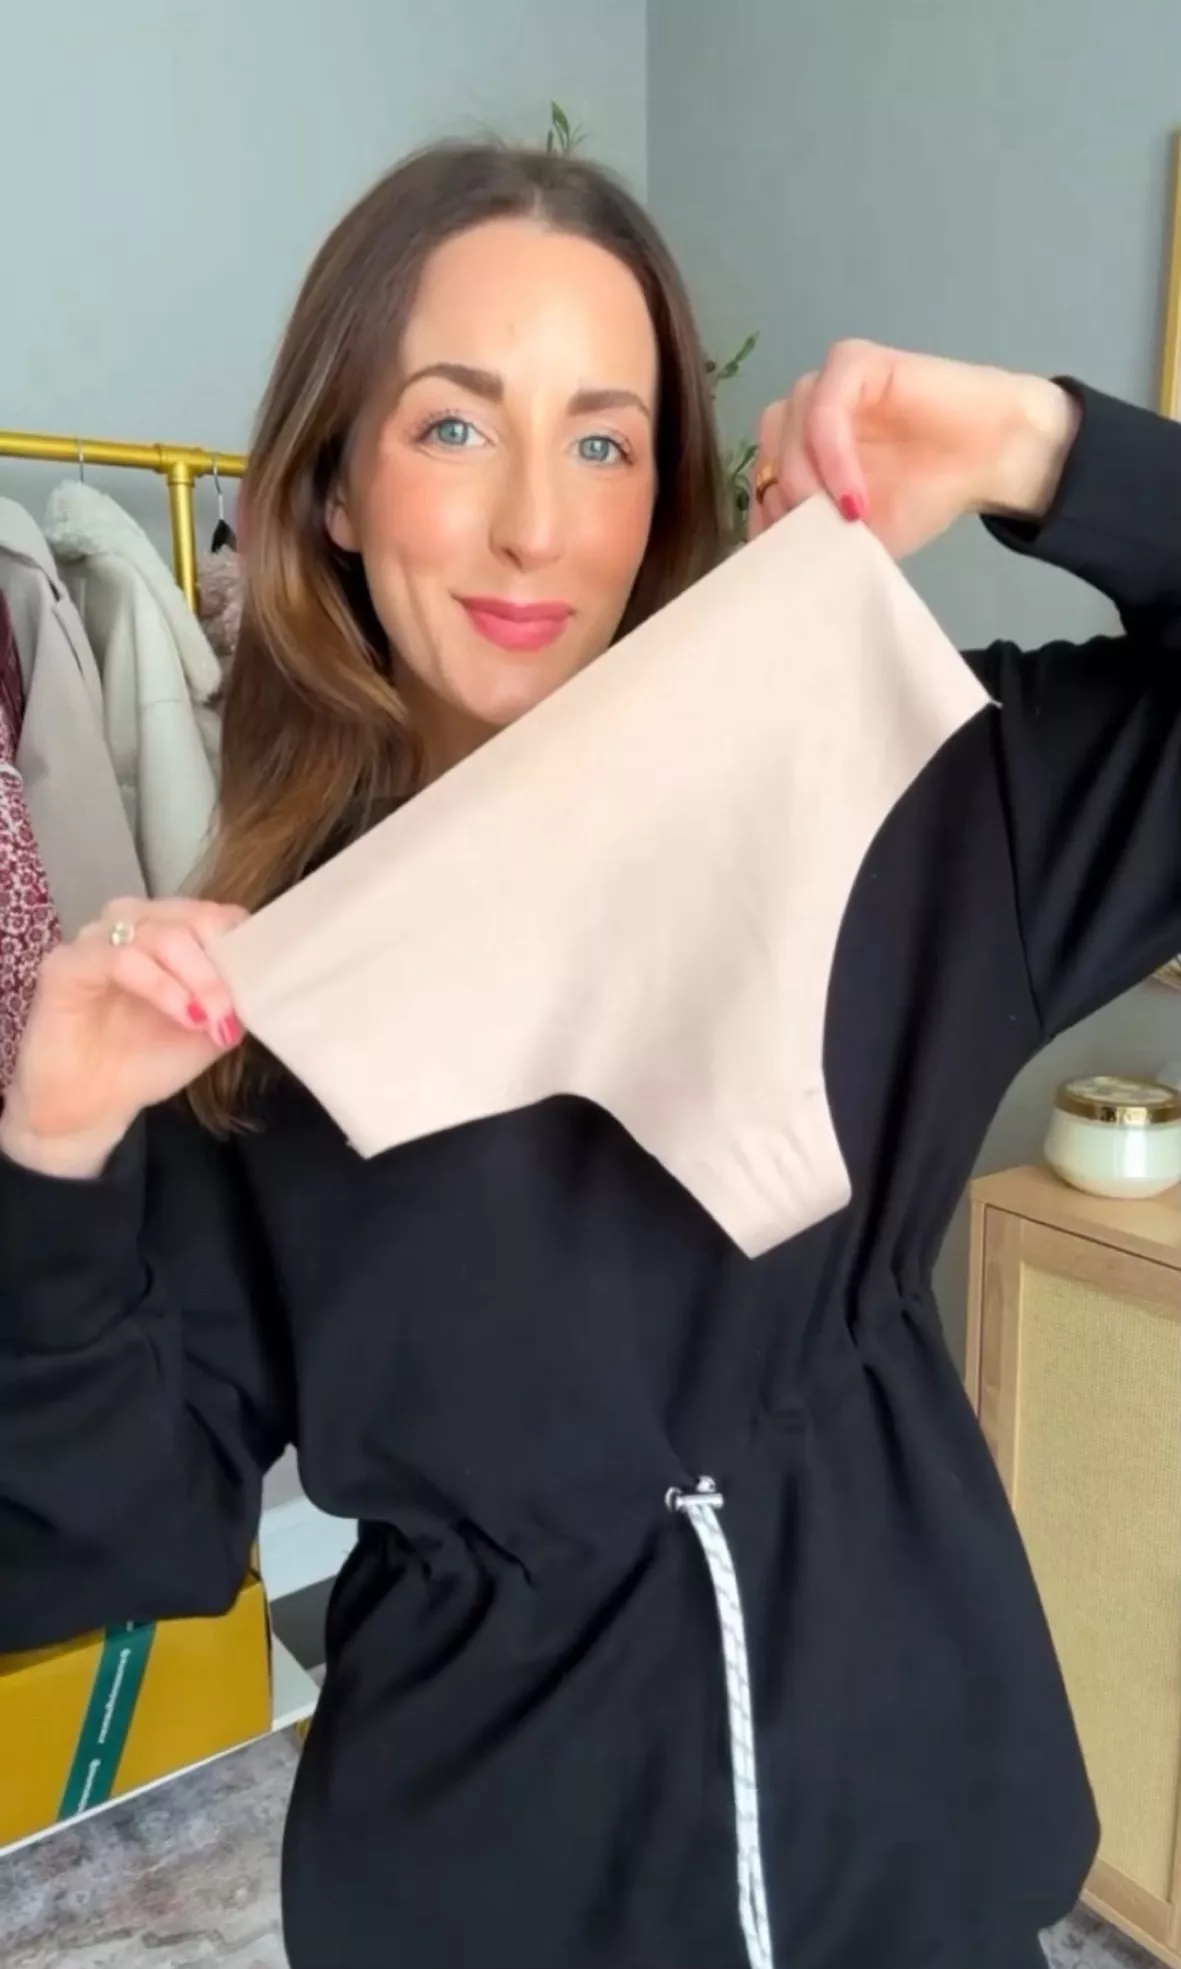 Wealurre Womens Underwear High … curated on LTK